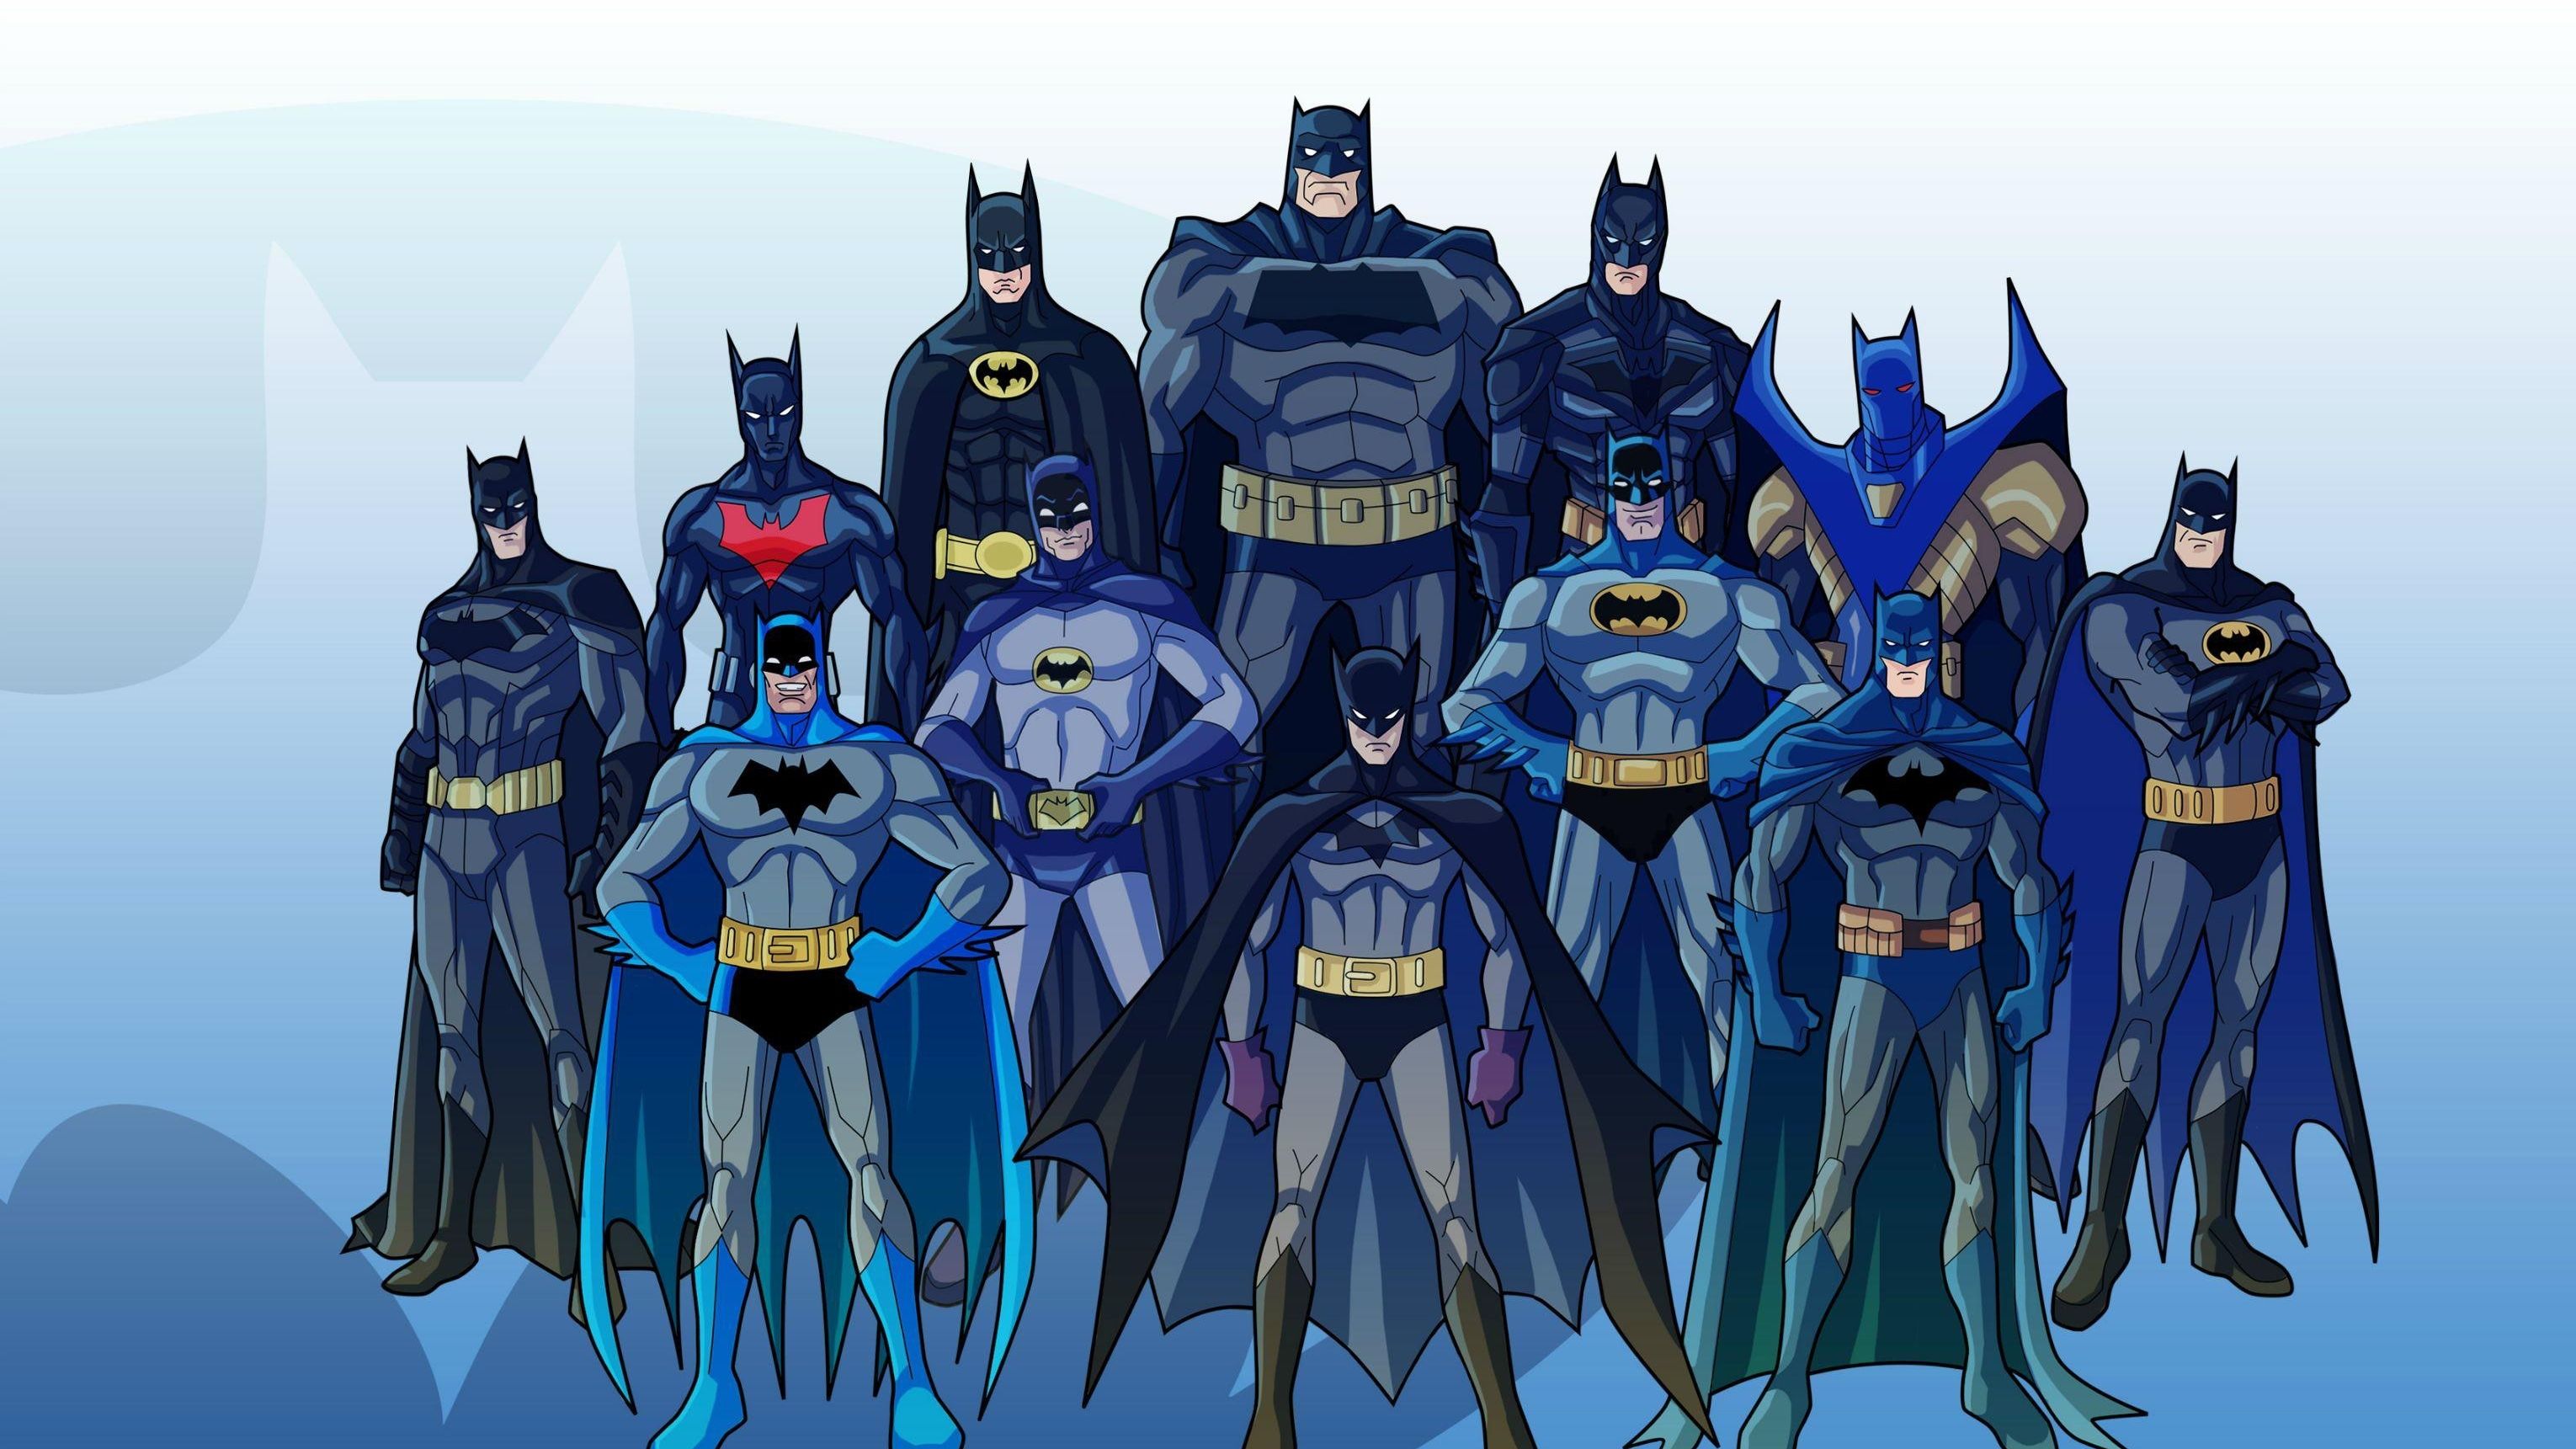 Batman Wallpaper HD 2016 download free Wallpapers, Backgrounds